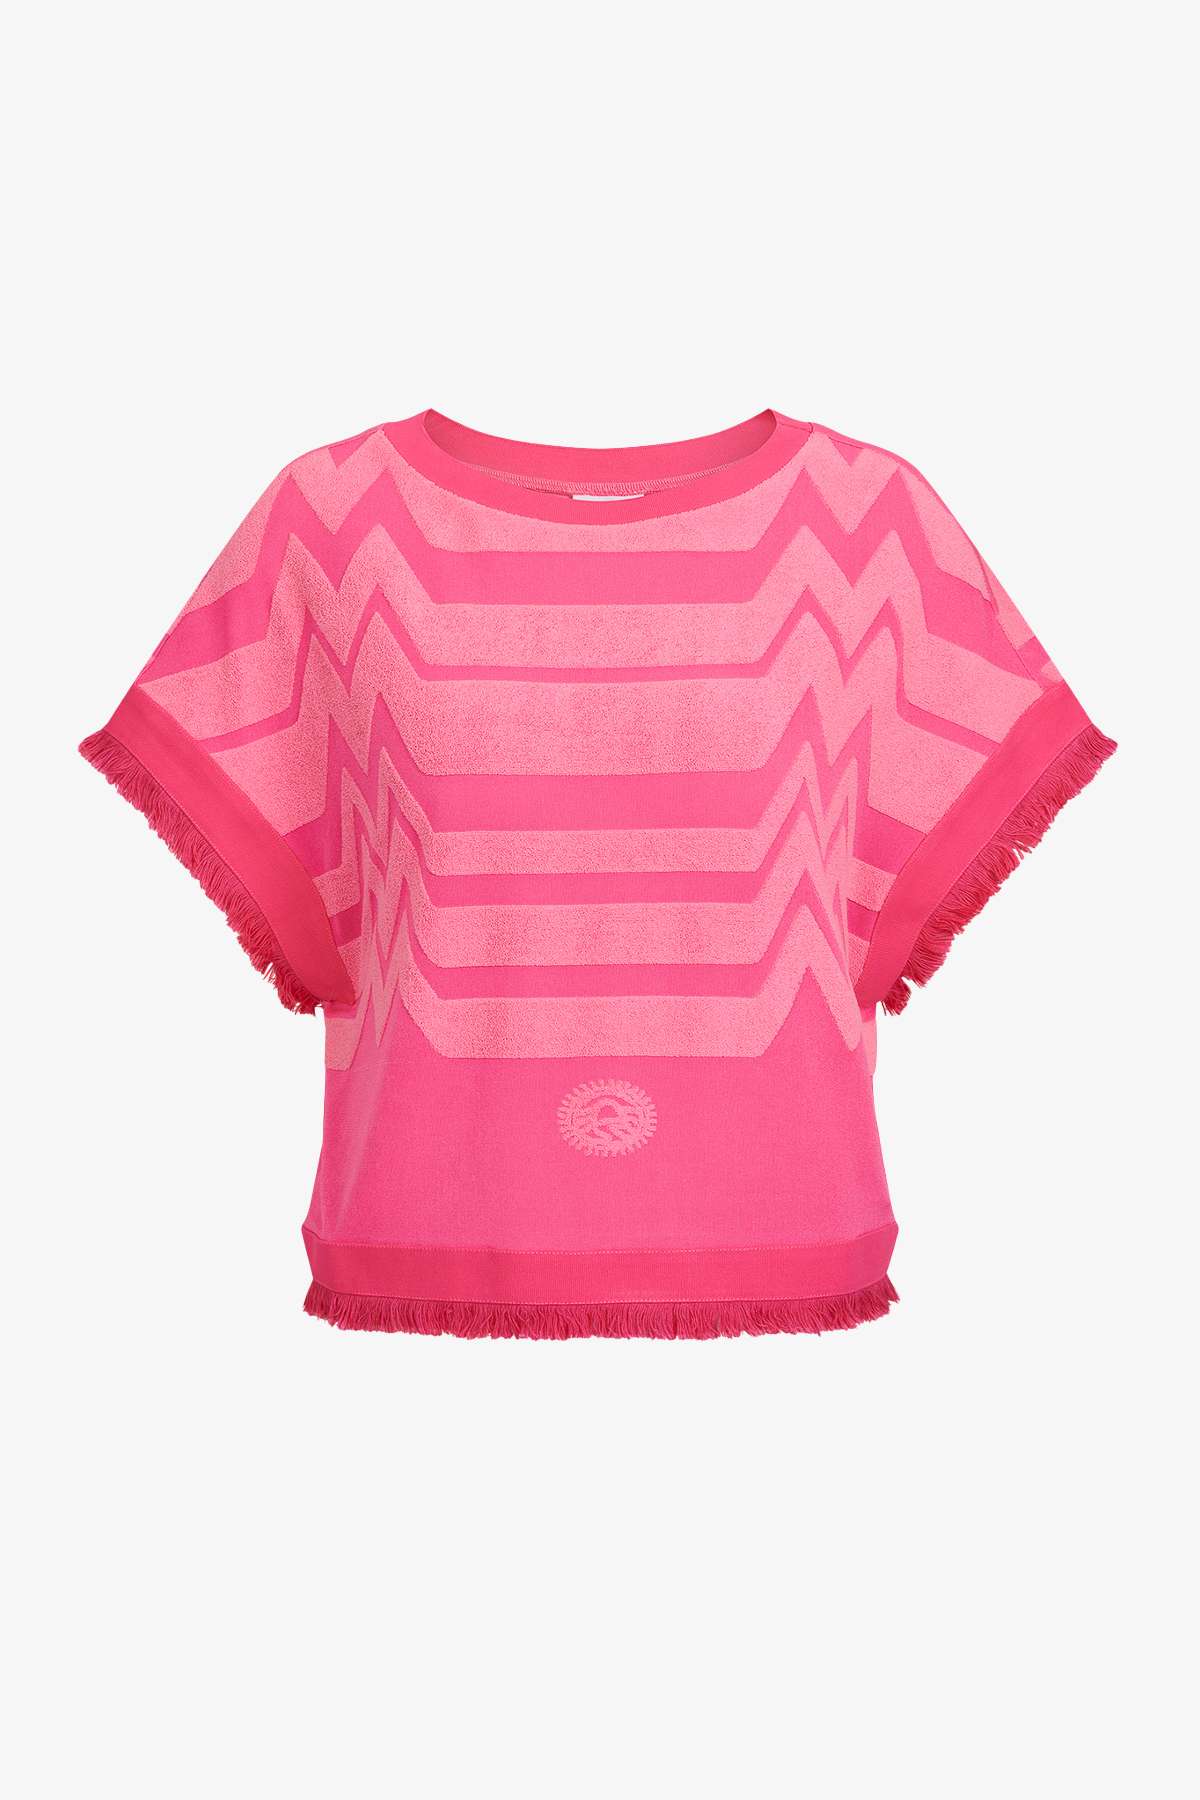 Sportalm tričko Tros candy pink Velikost: 38